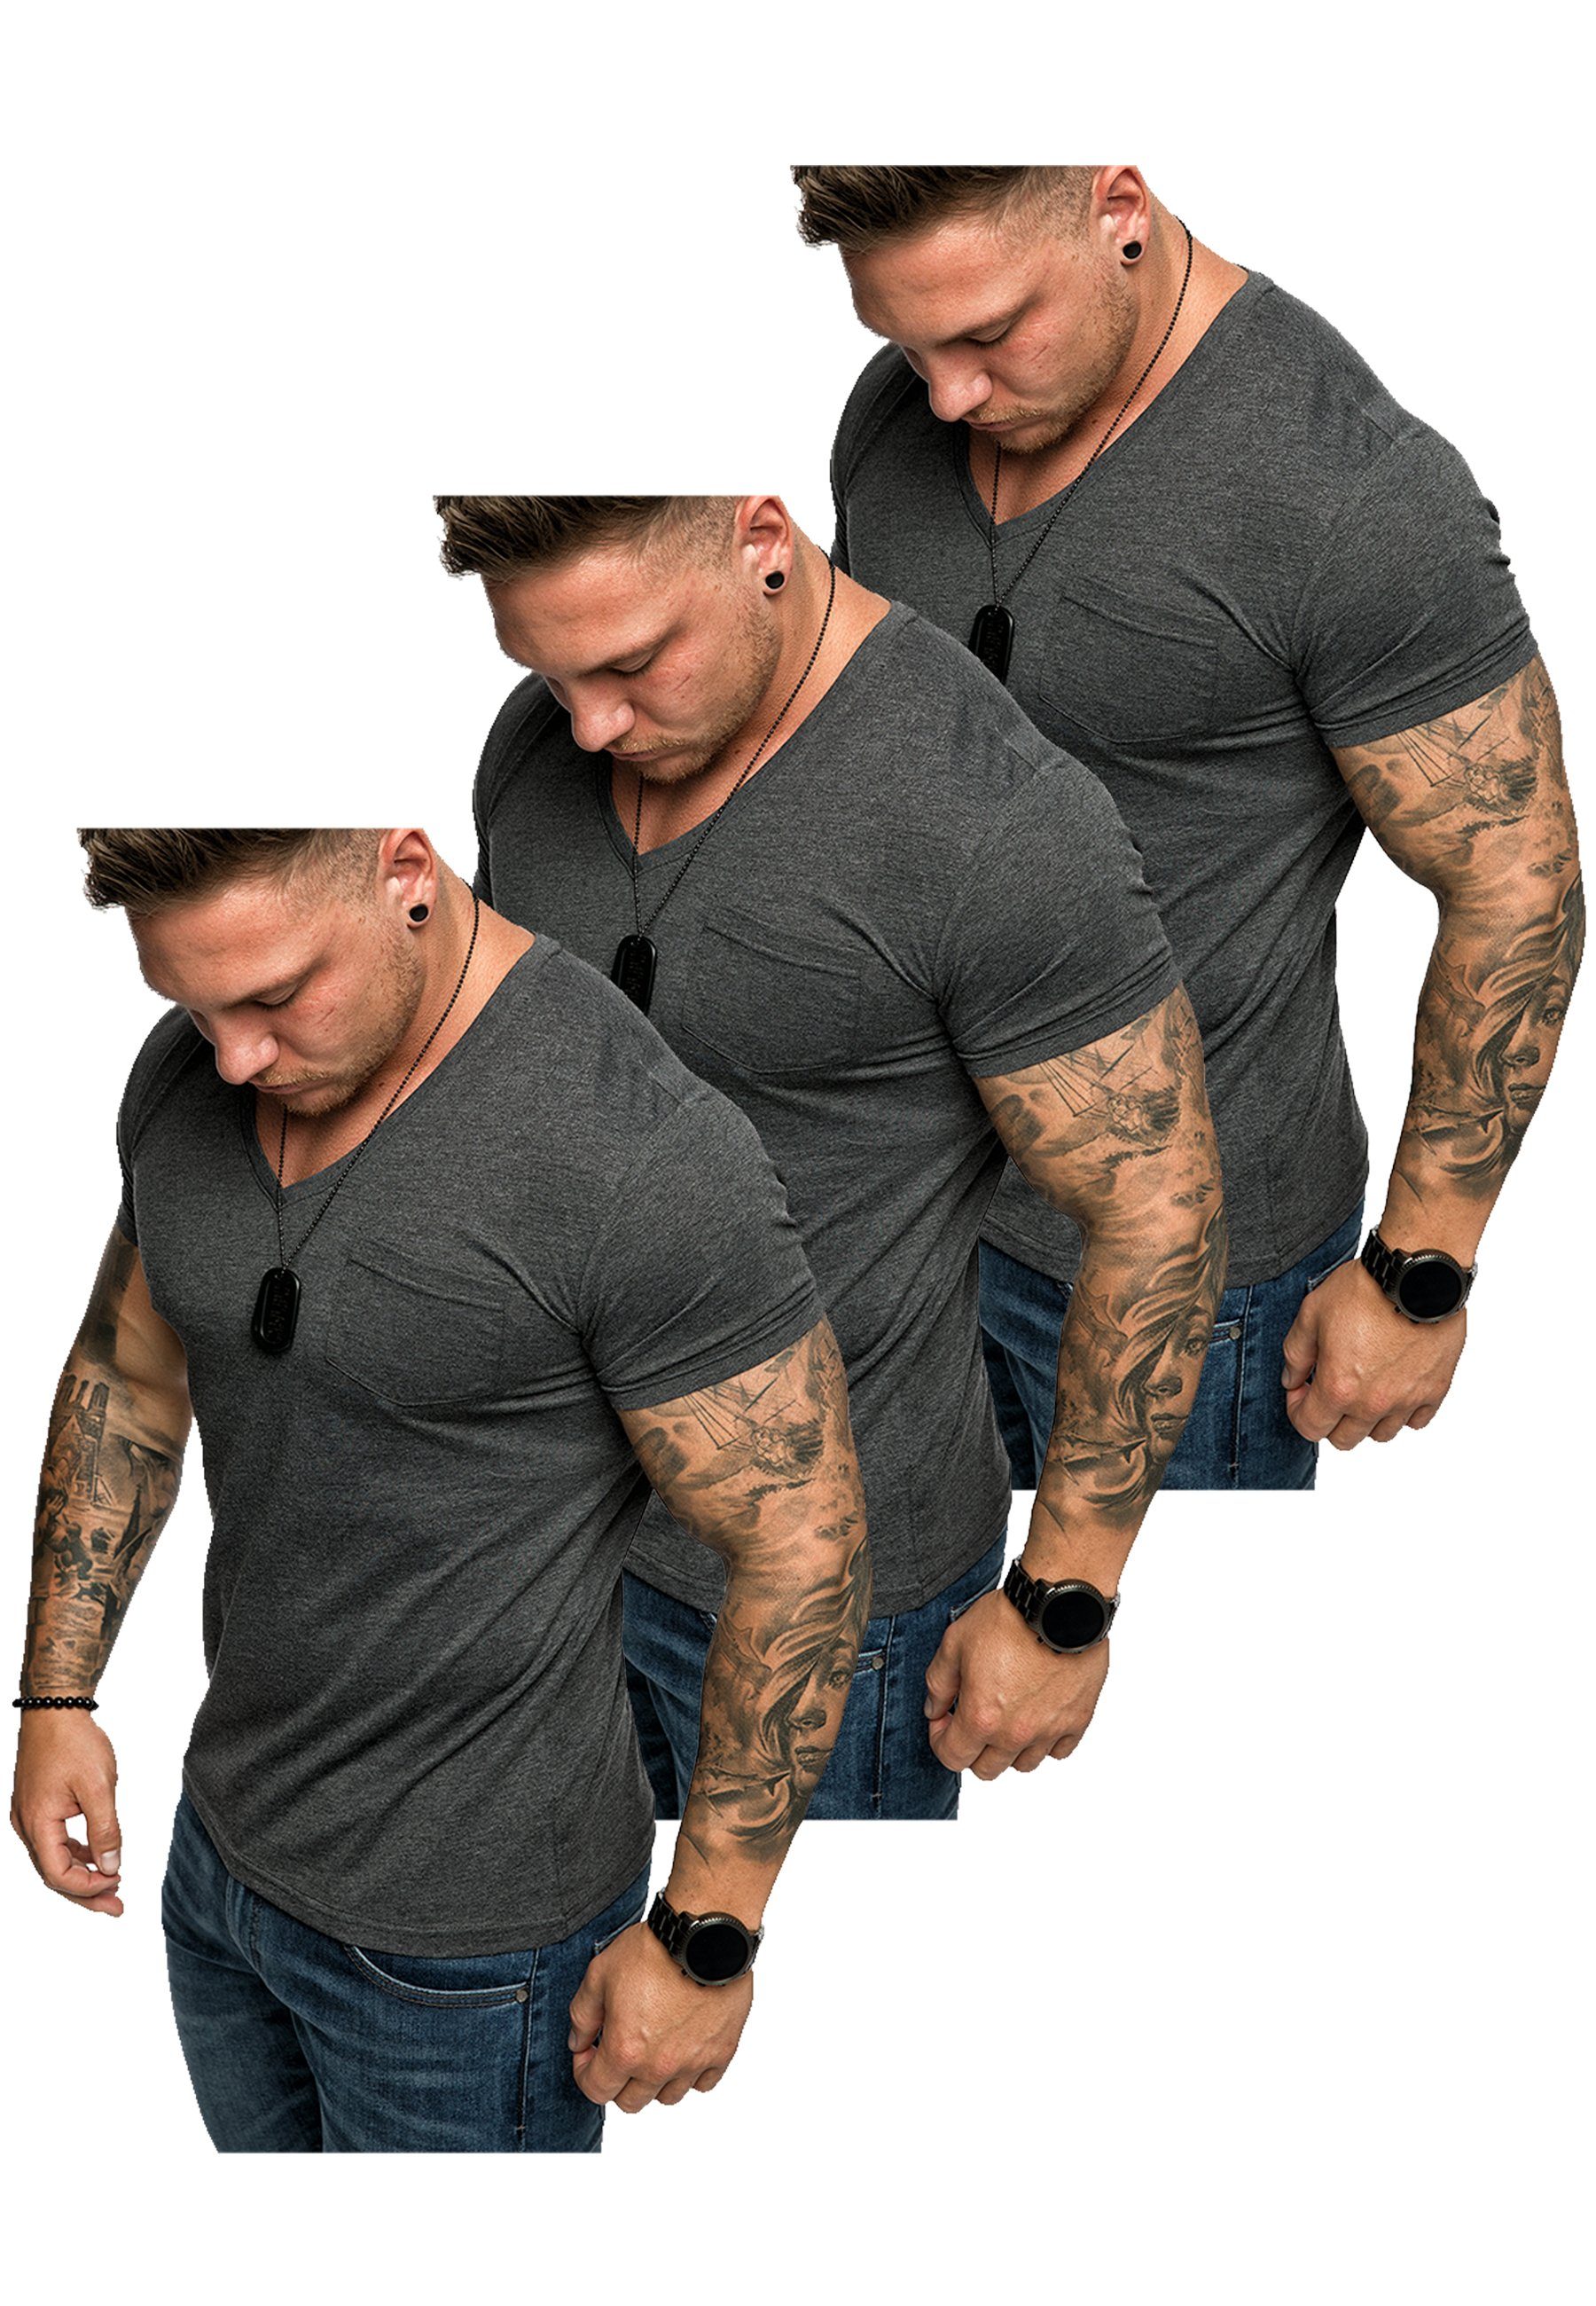 Herren T-Shirt mit T-Shirts 3. V-Ausschnitt Oversize T-Shirt Amaci&Sons Anthrazit) (3x Basic PATERSON (3er-Pack) 3er-Pack Herren